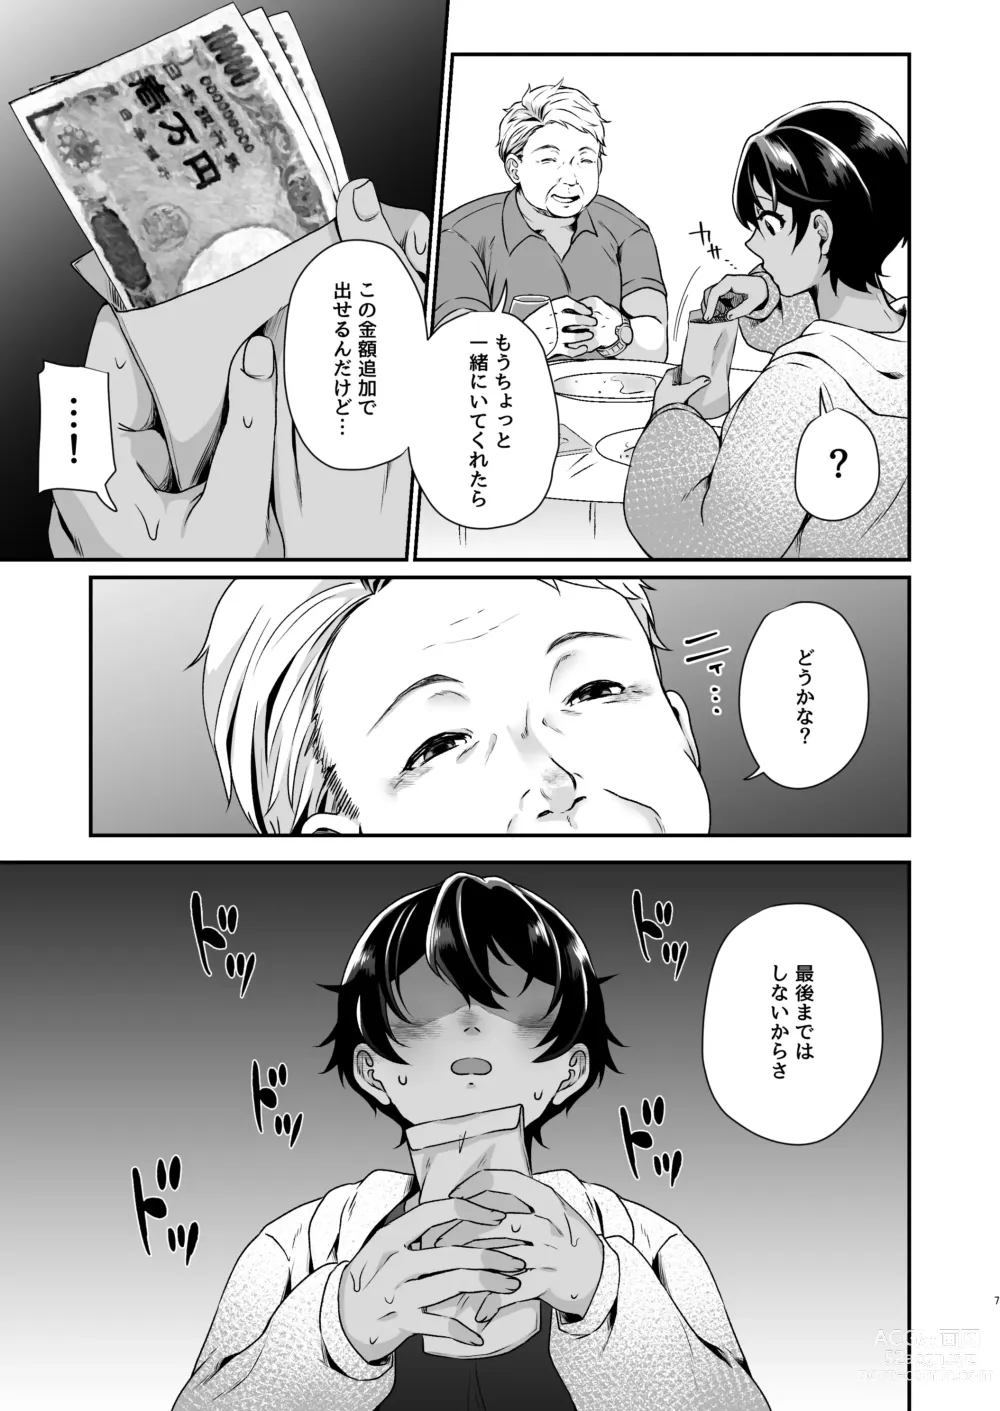 Page 6 of doujinshi Boyish JK Papakatsu ni Ochiru